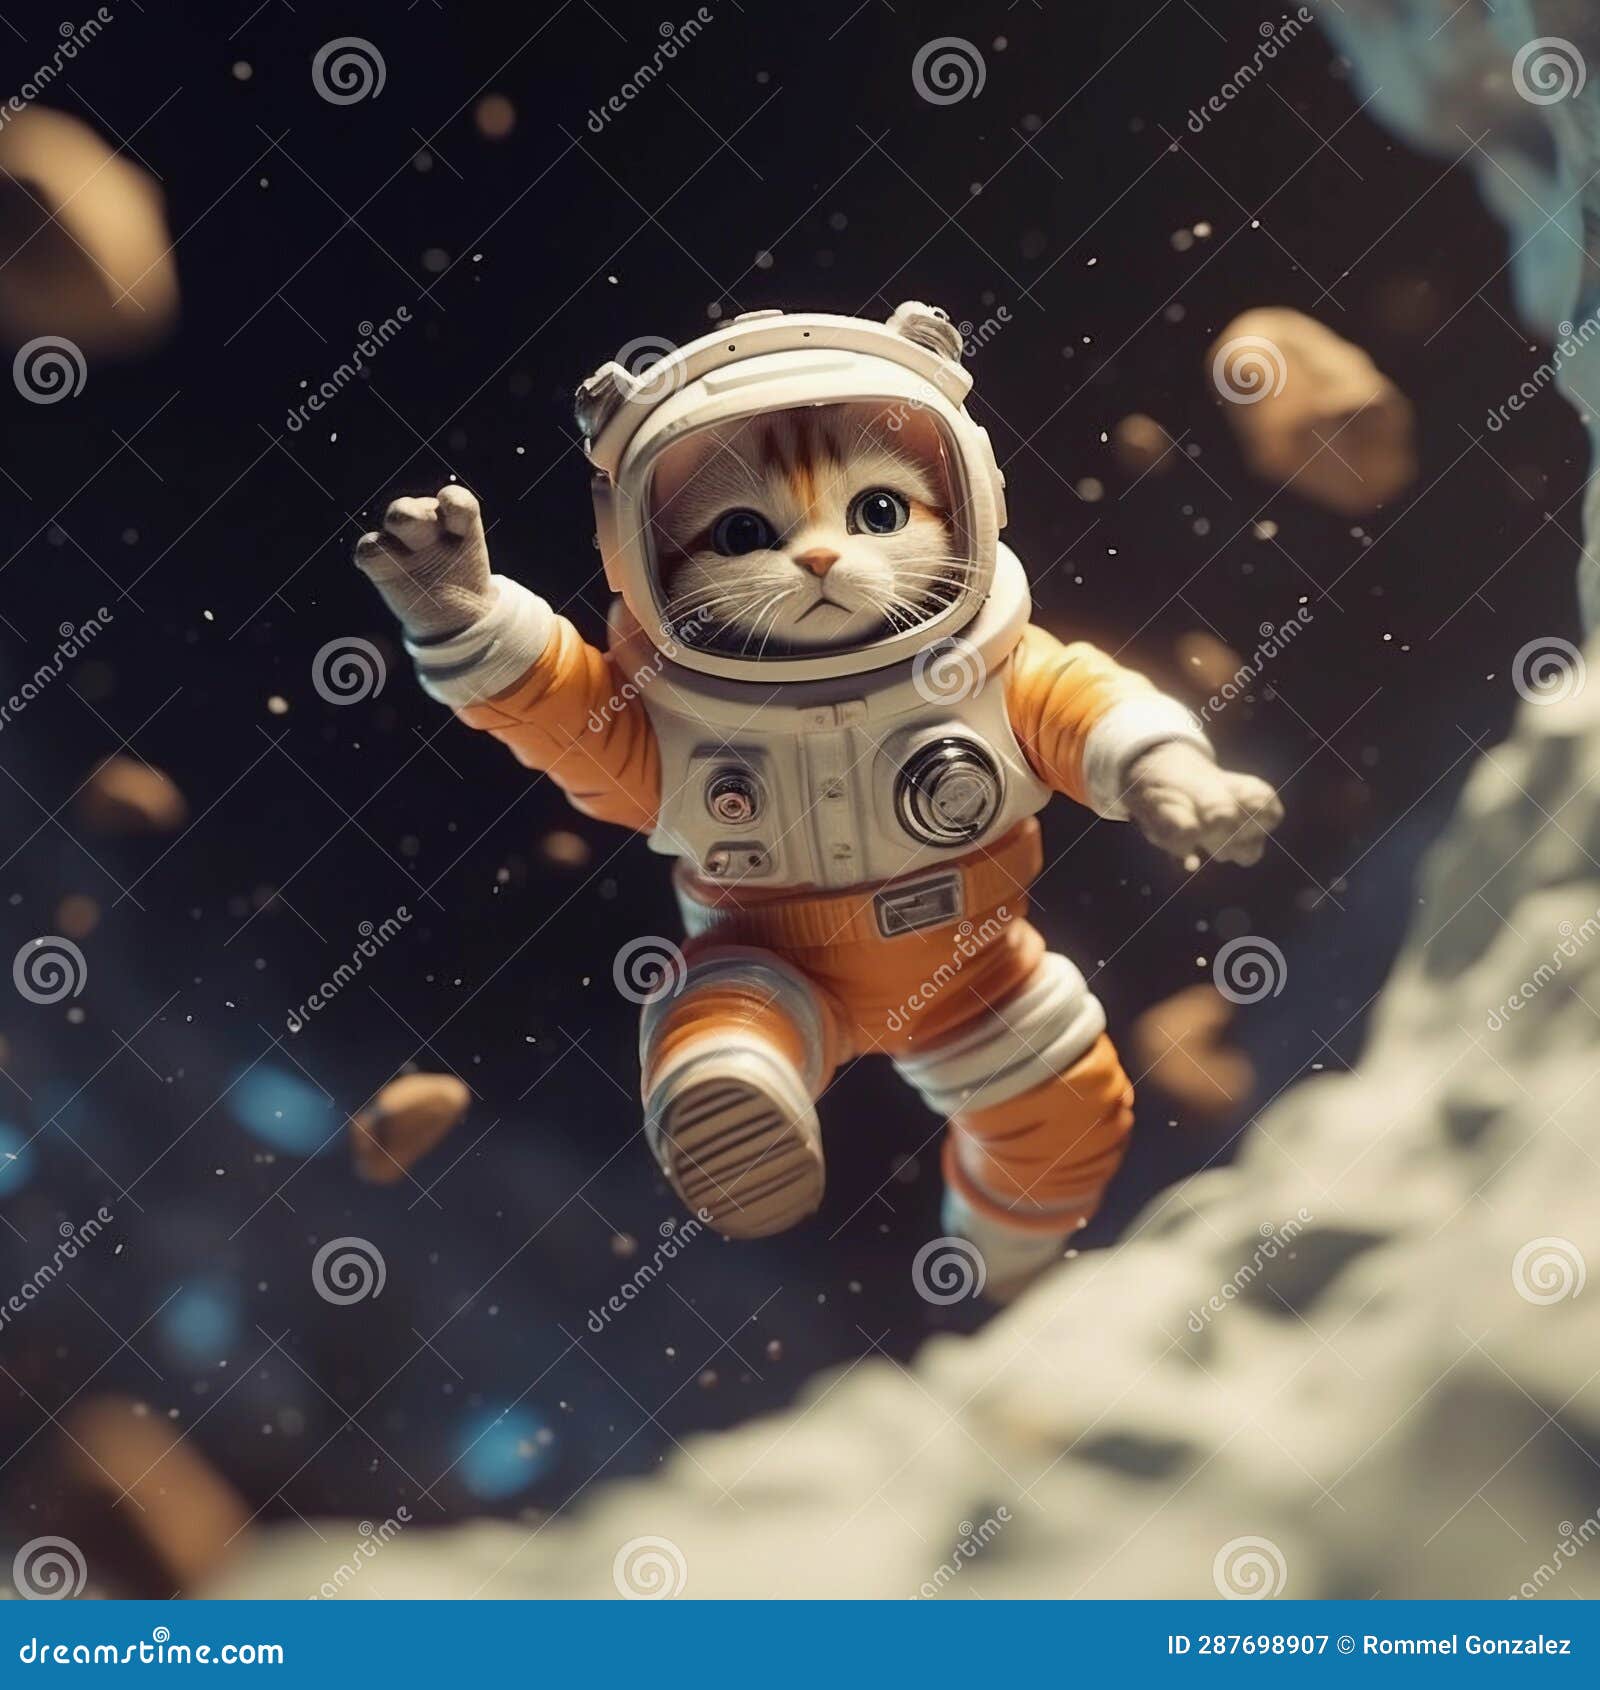 cat astronaut walking on lunar surface. espacial travel concept